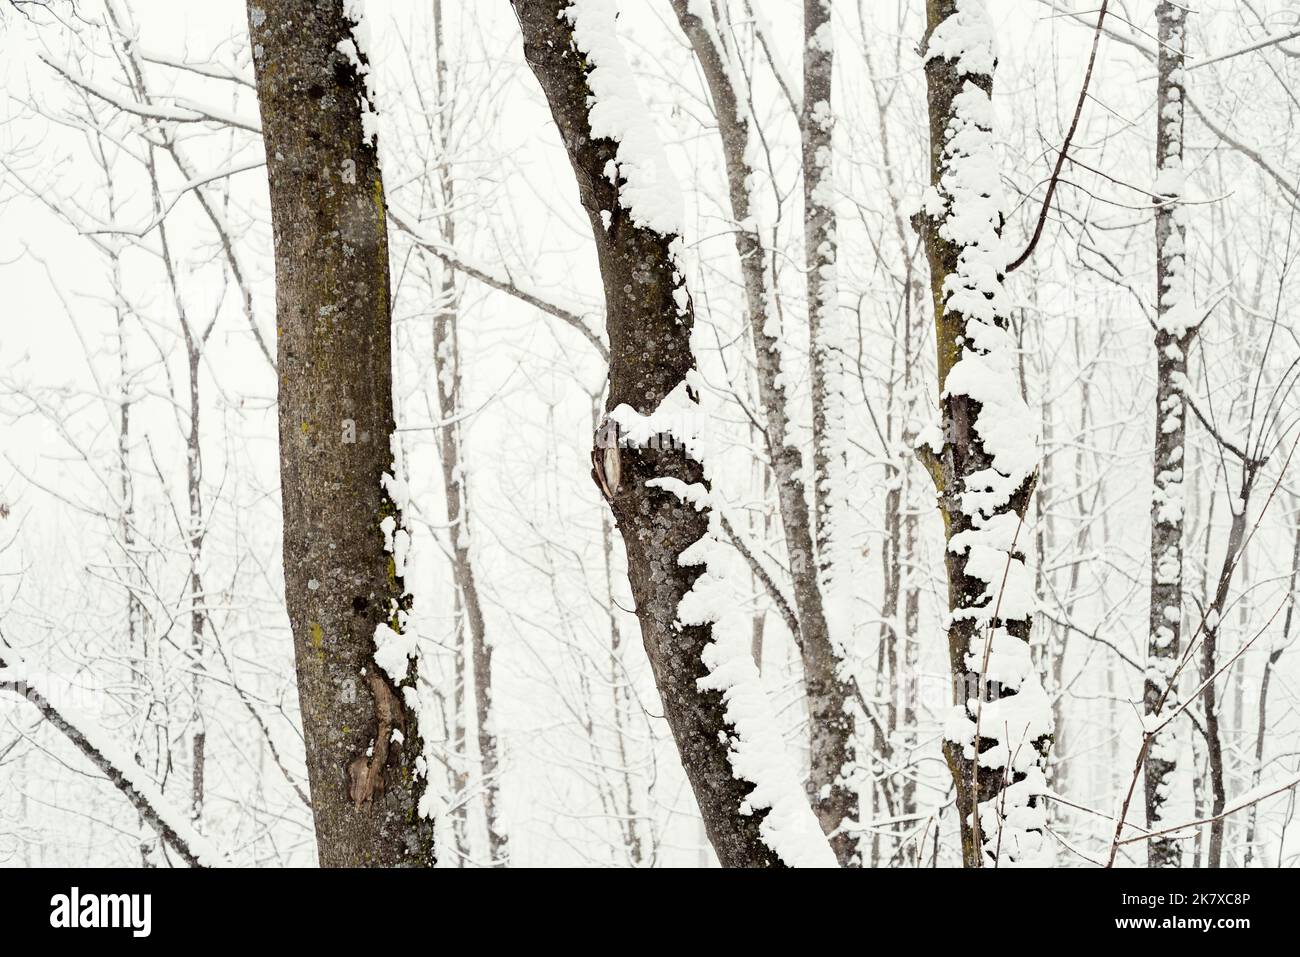 Birches under the snow Stock Photo